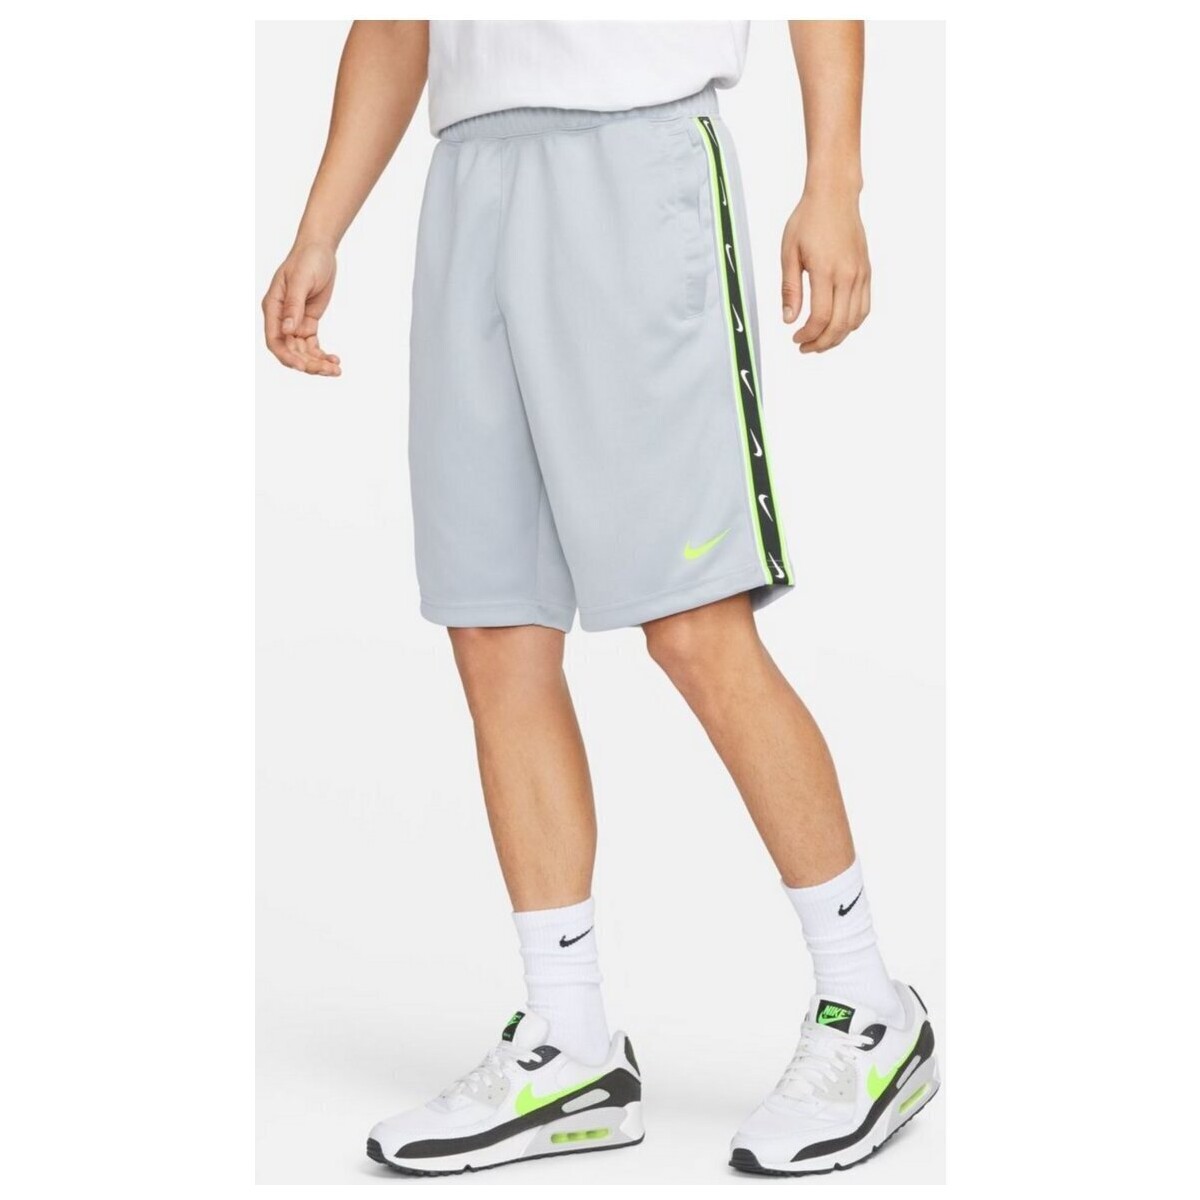 Kleidung Herren Shorts / Bermudas Nike Sport  Sportswear Men